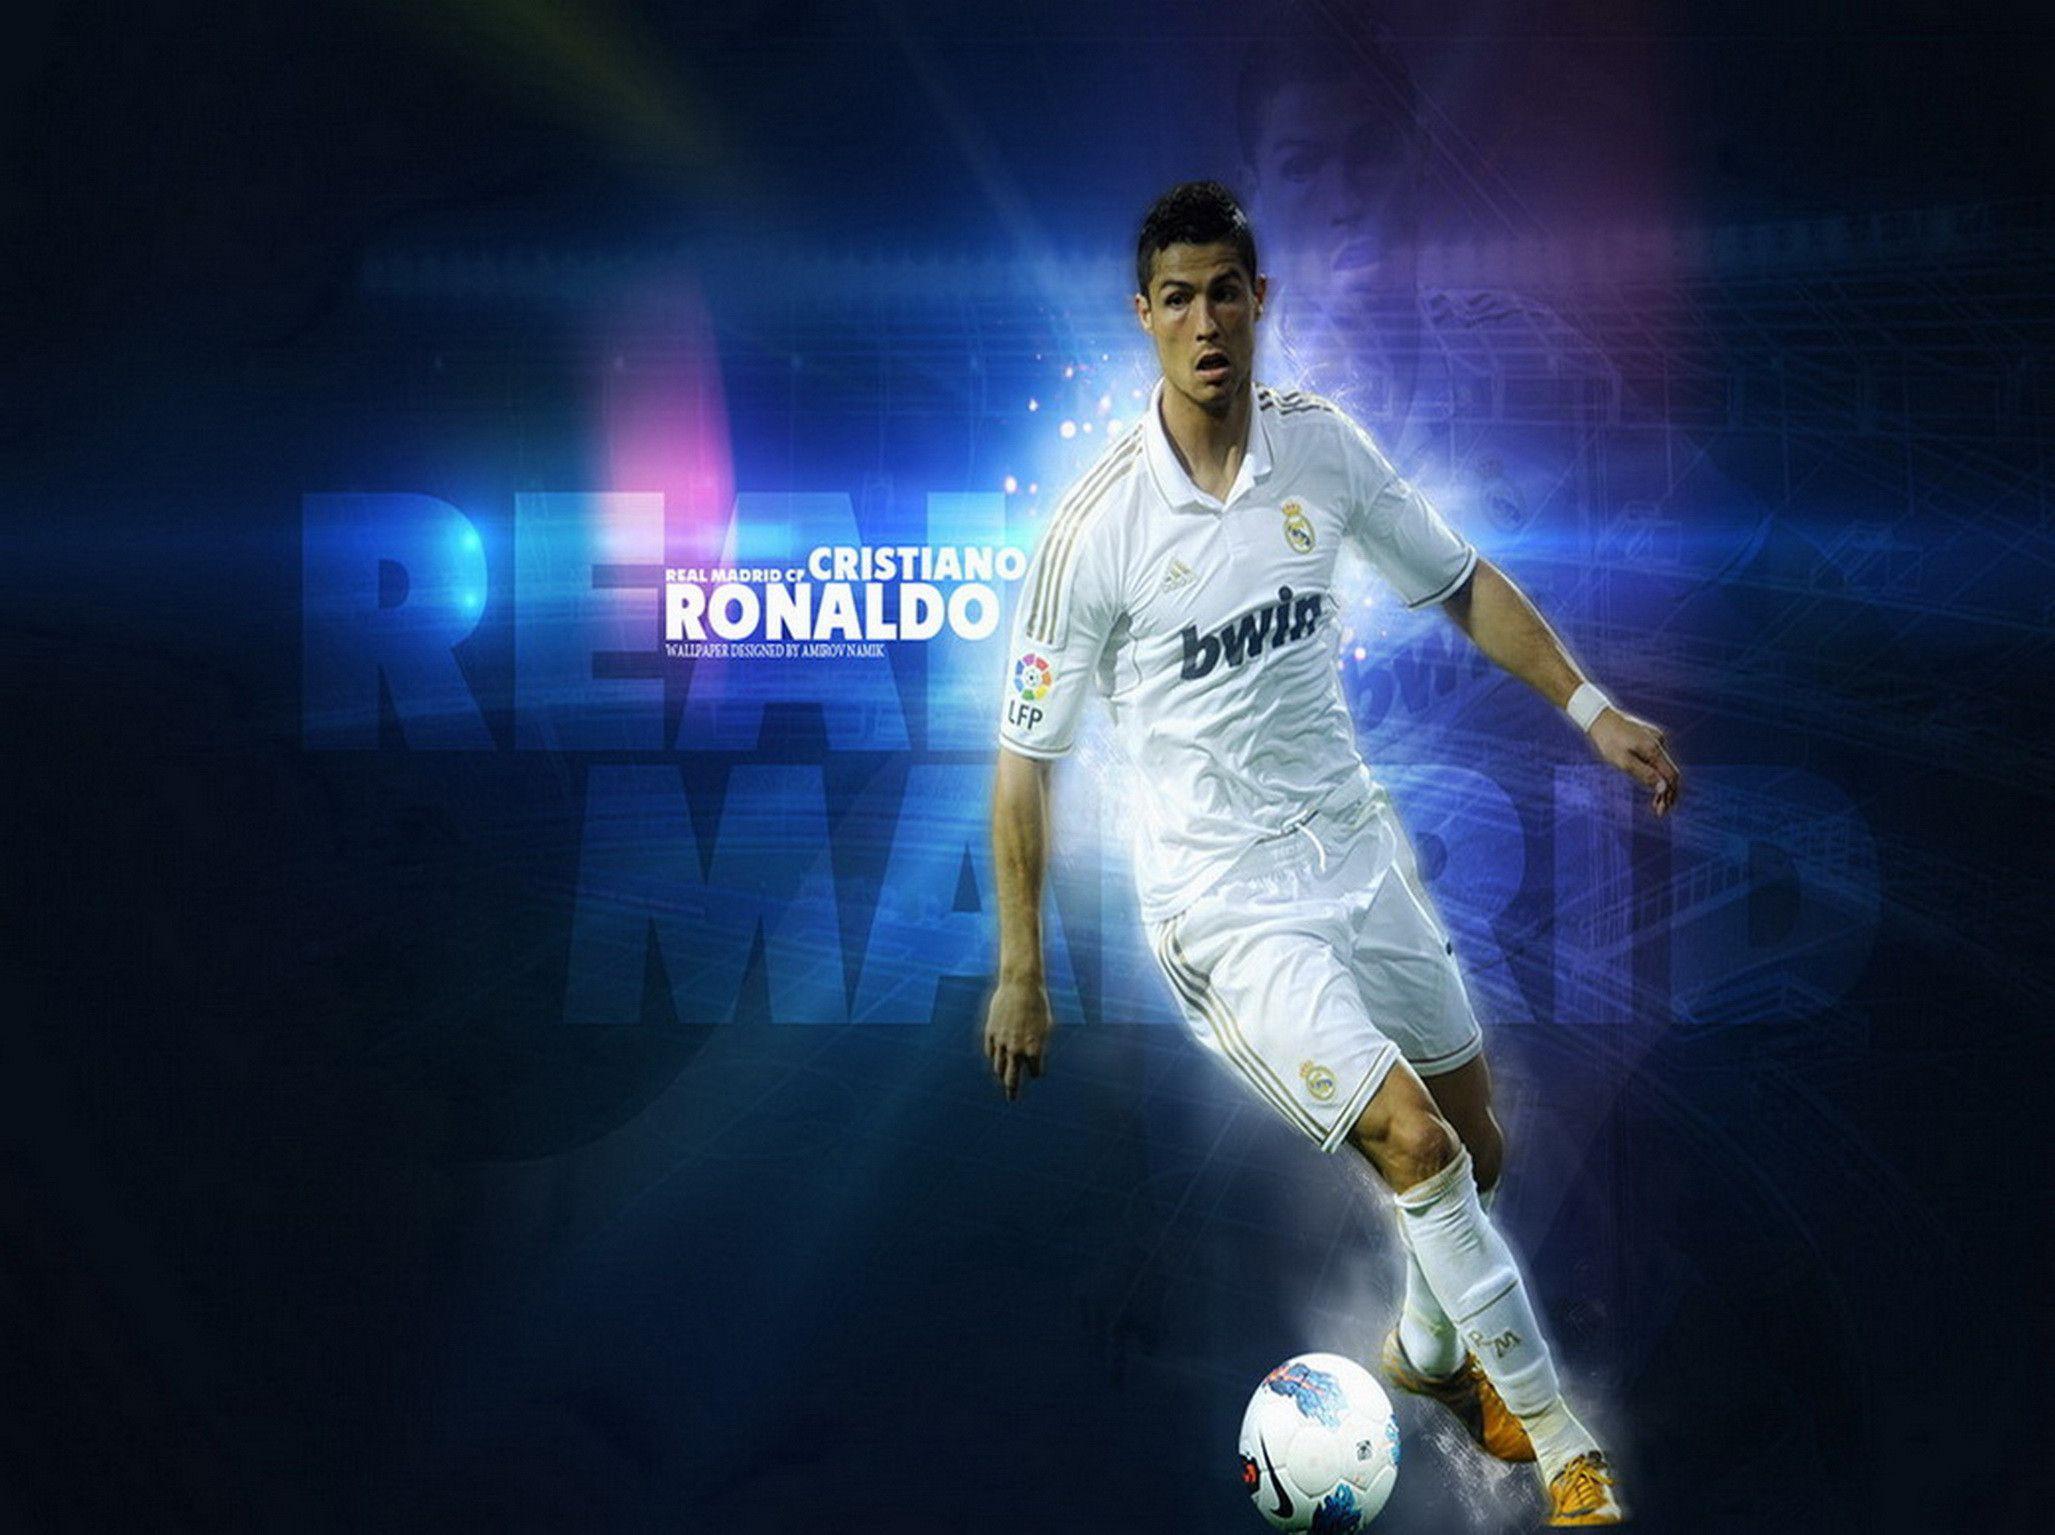 Cristiano Ronaldo Real Madrid 2013 Wallpaper and Picture